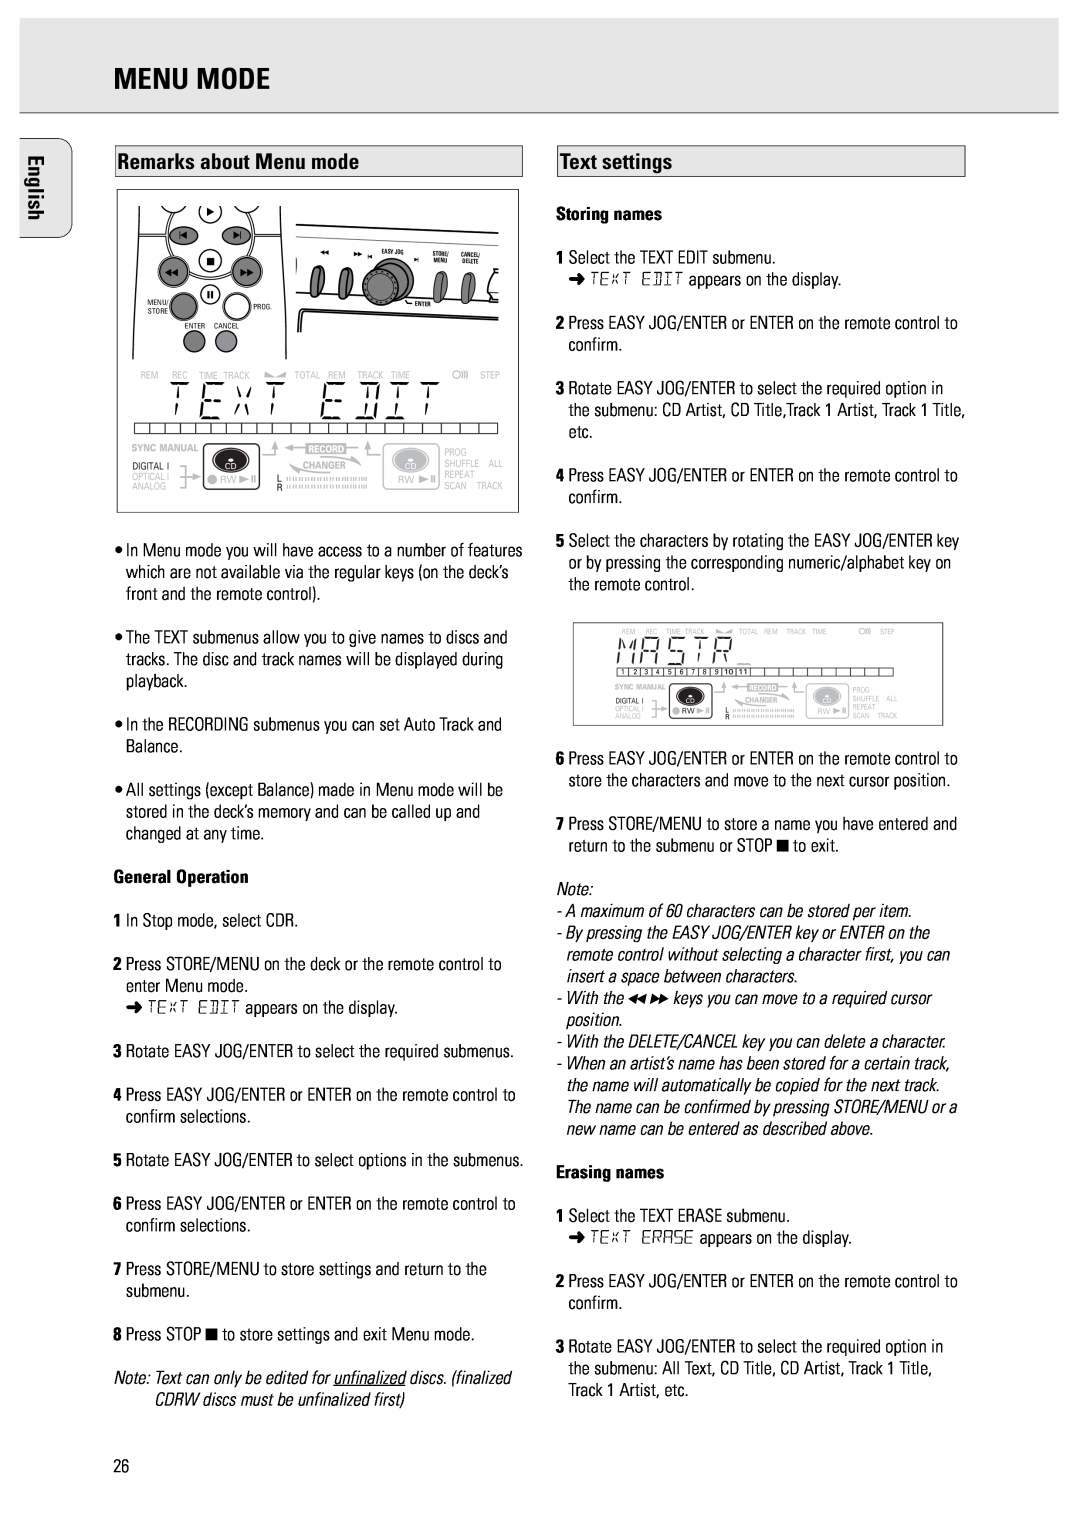 Philips CDR775 manual Menu Mode, Remarks about Menu mode, Text settings, General Operation, Storing names, Erasing names 